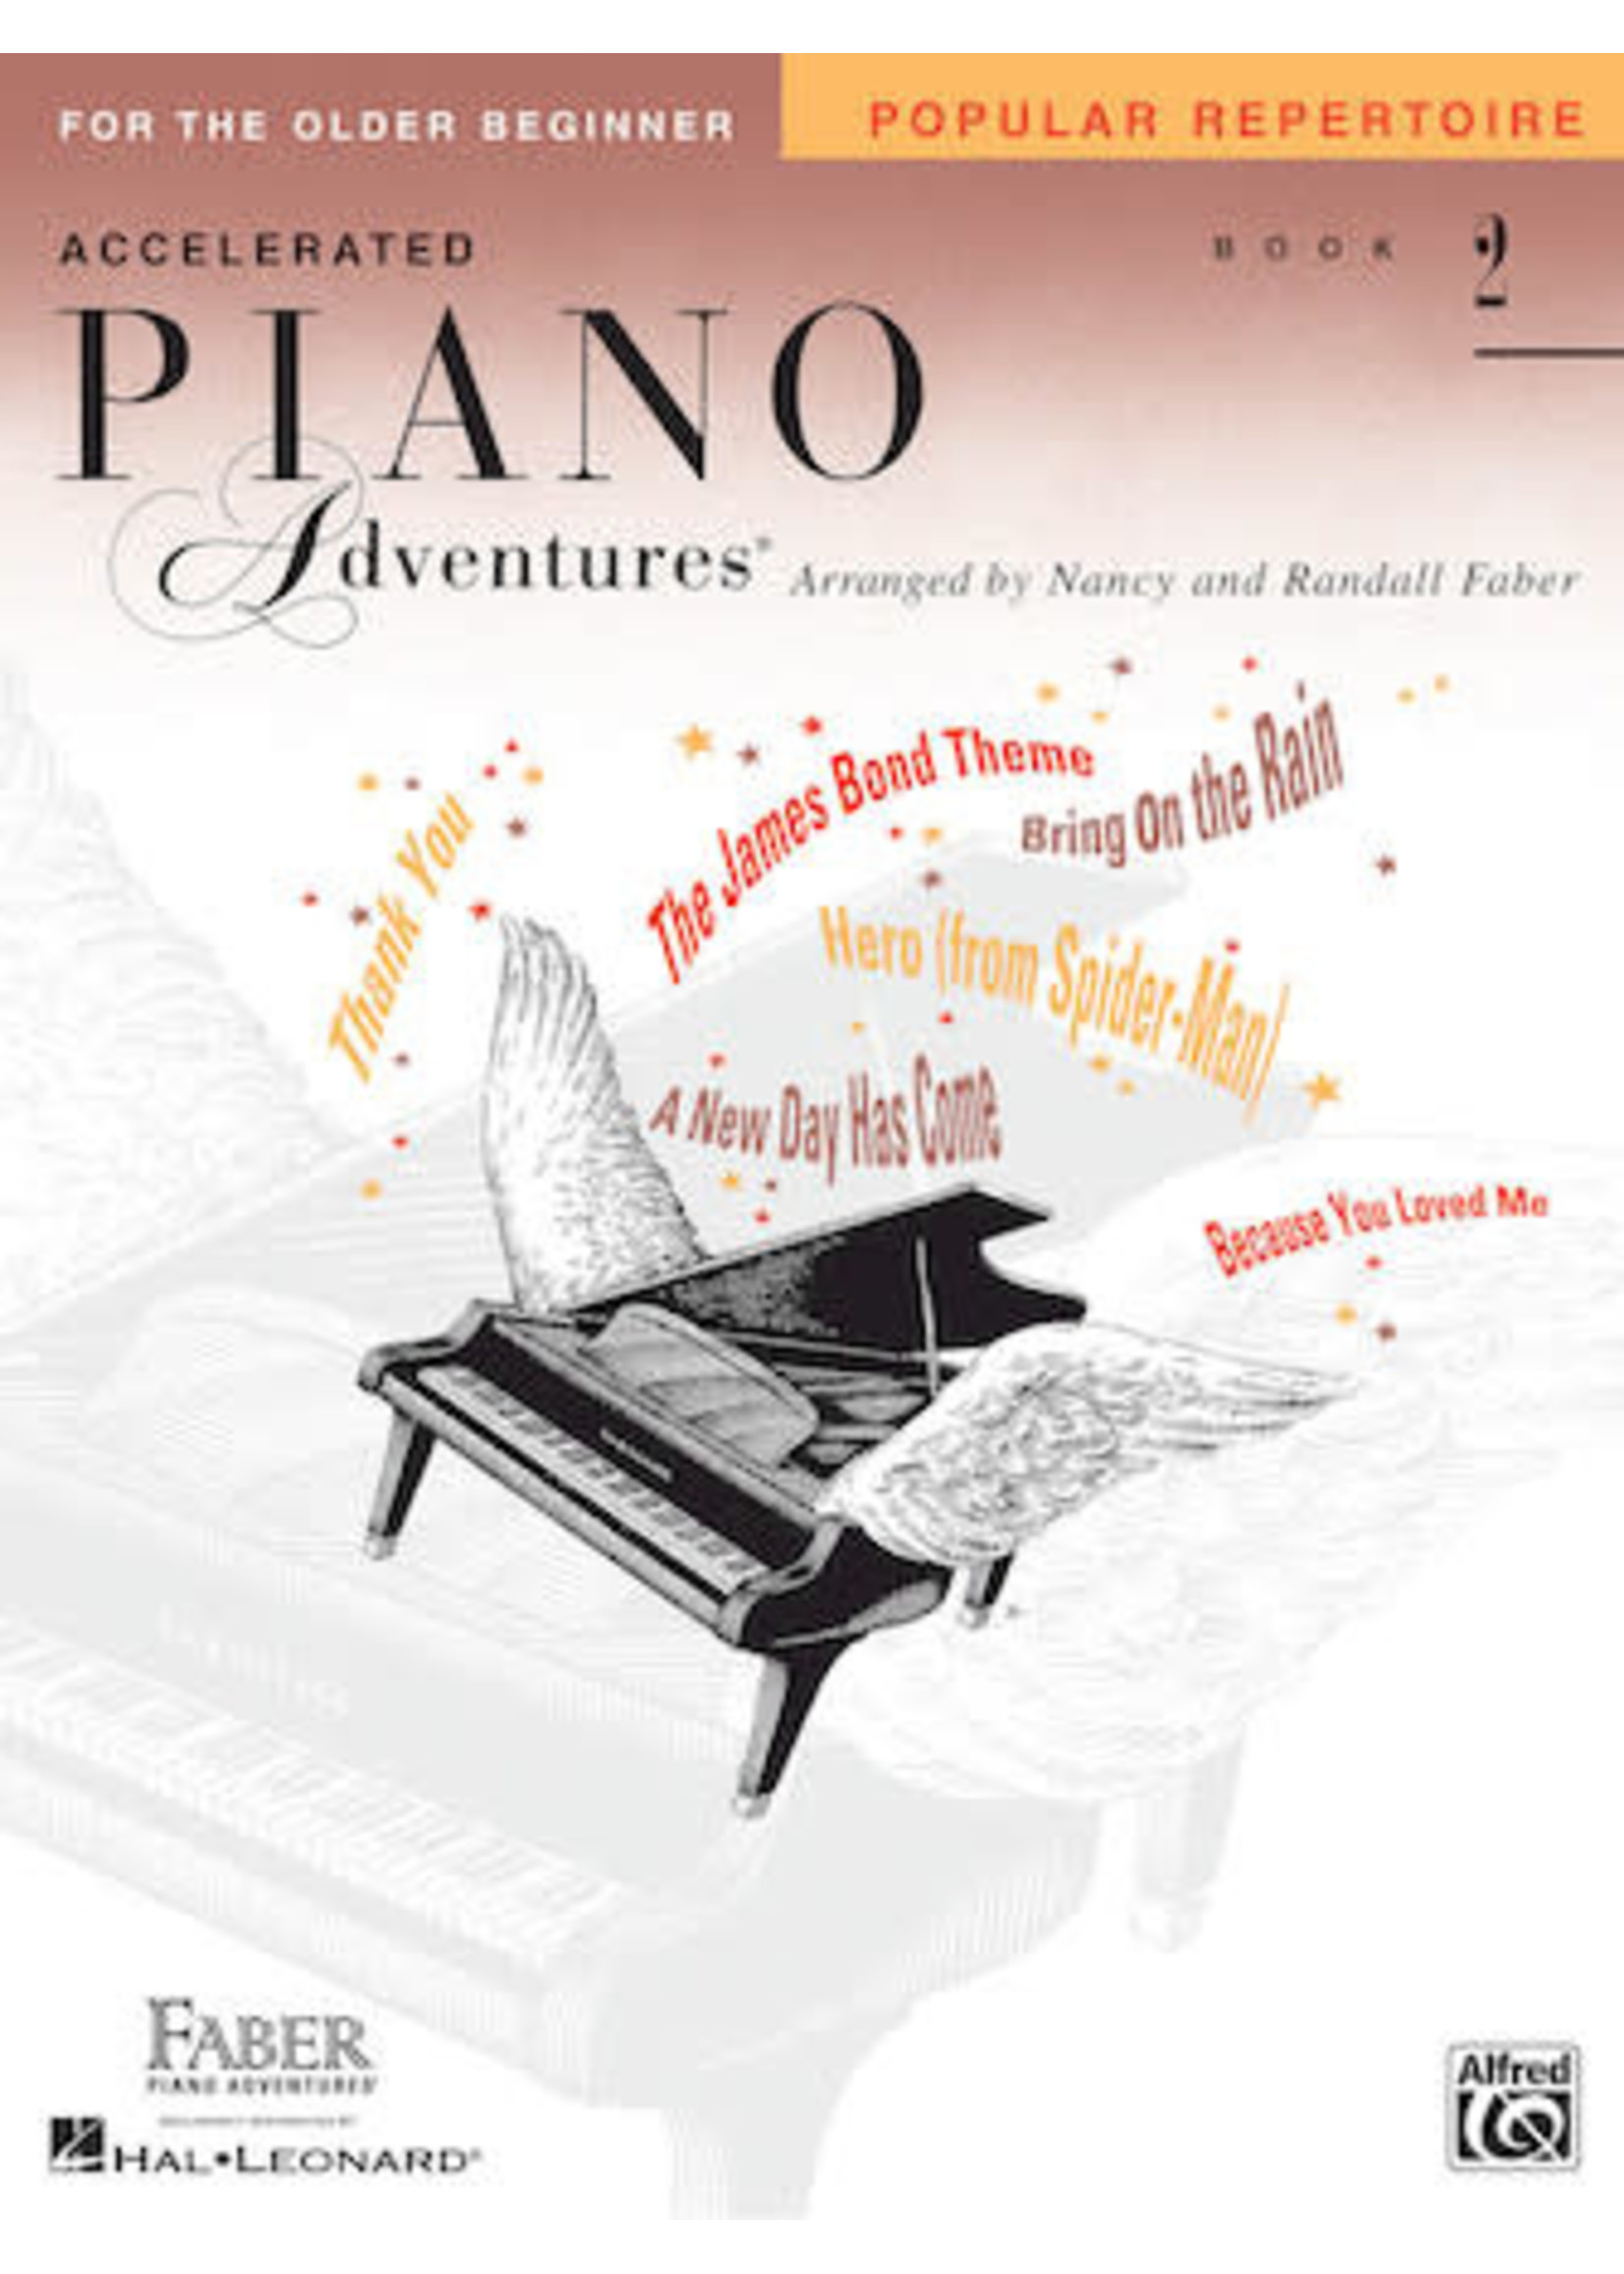 Hal Leonard Faber Accelerated Piano Adventures for the Older Beginner Popular Repertoire 2